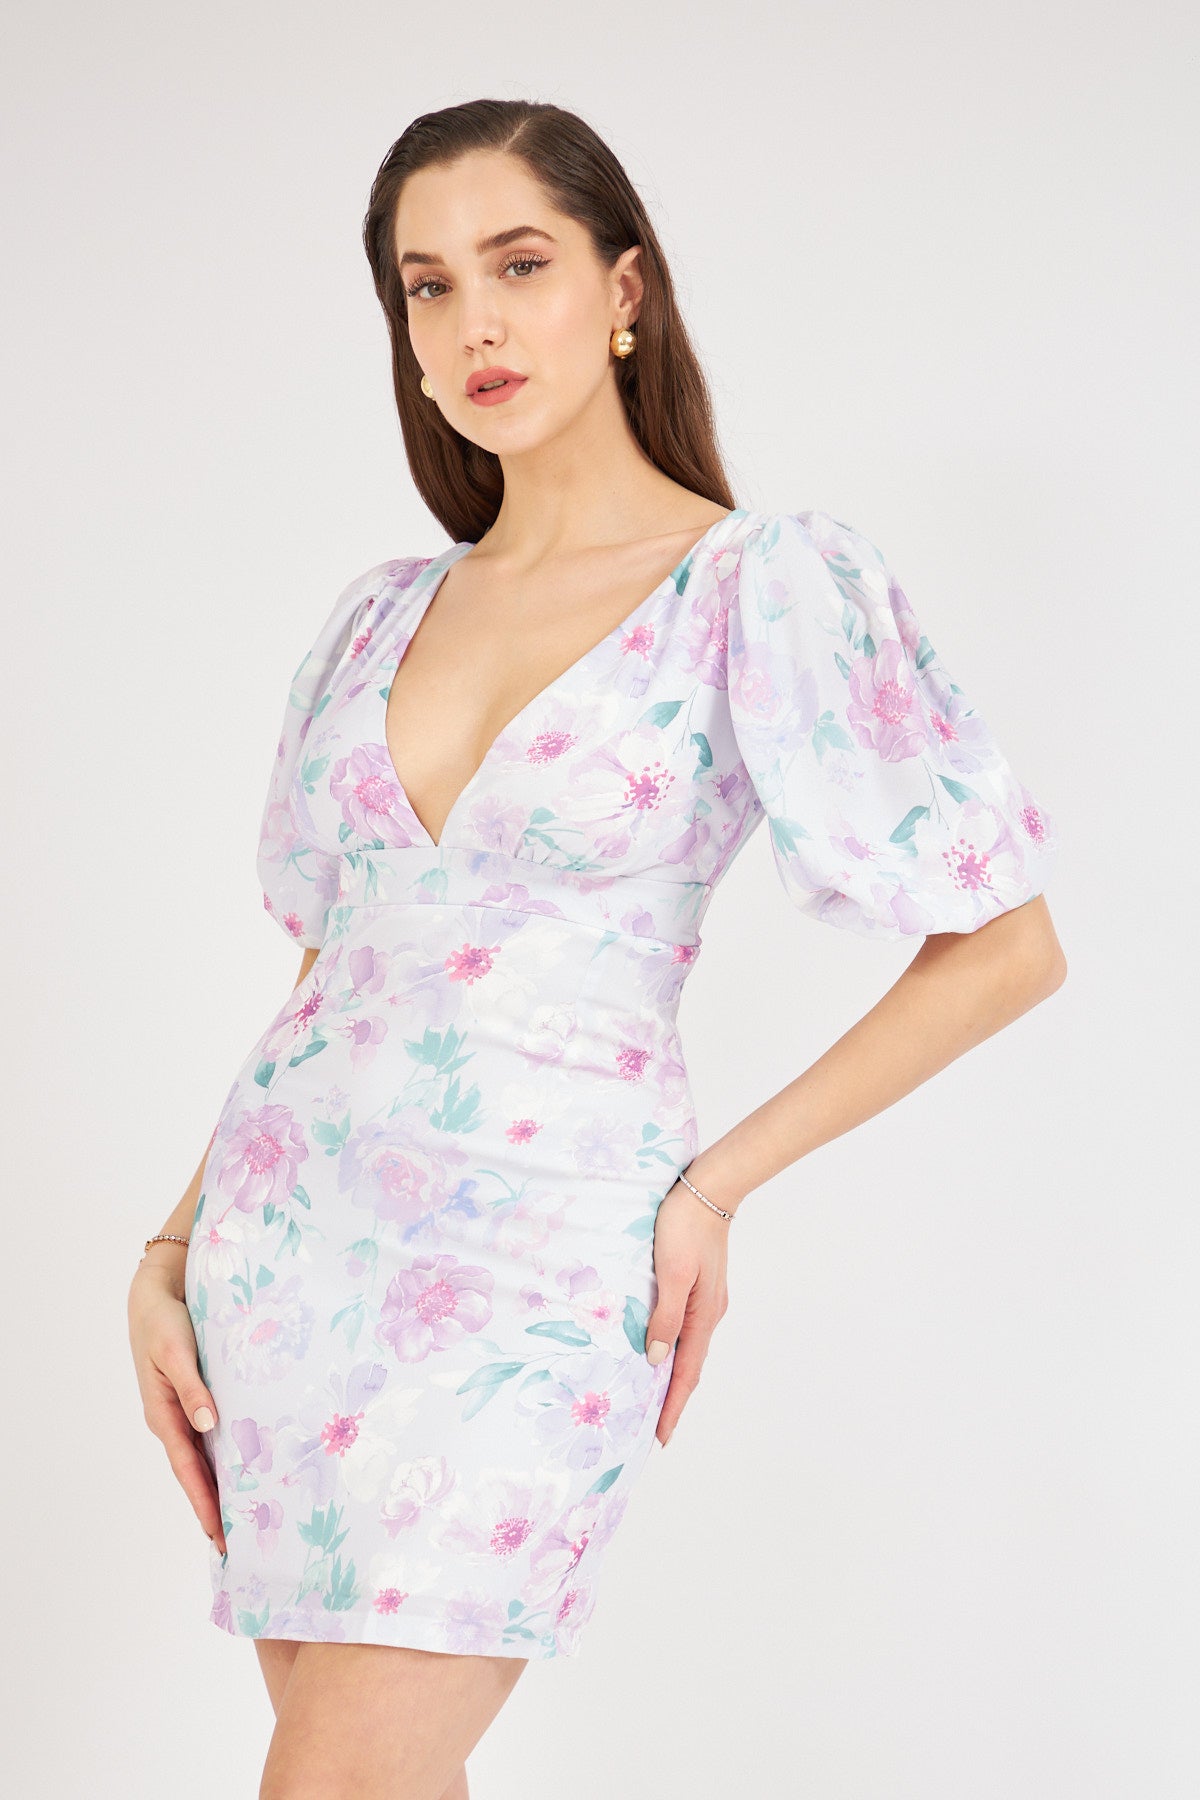 Lilac Floral Patterned Dress - Lebbse